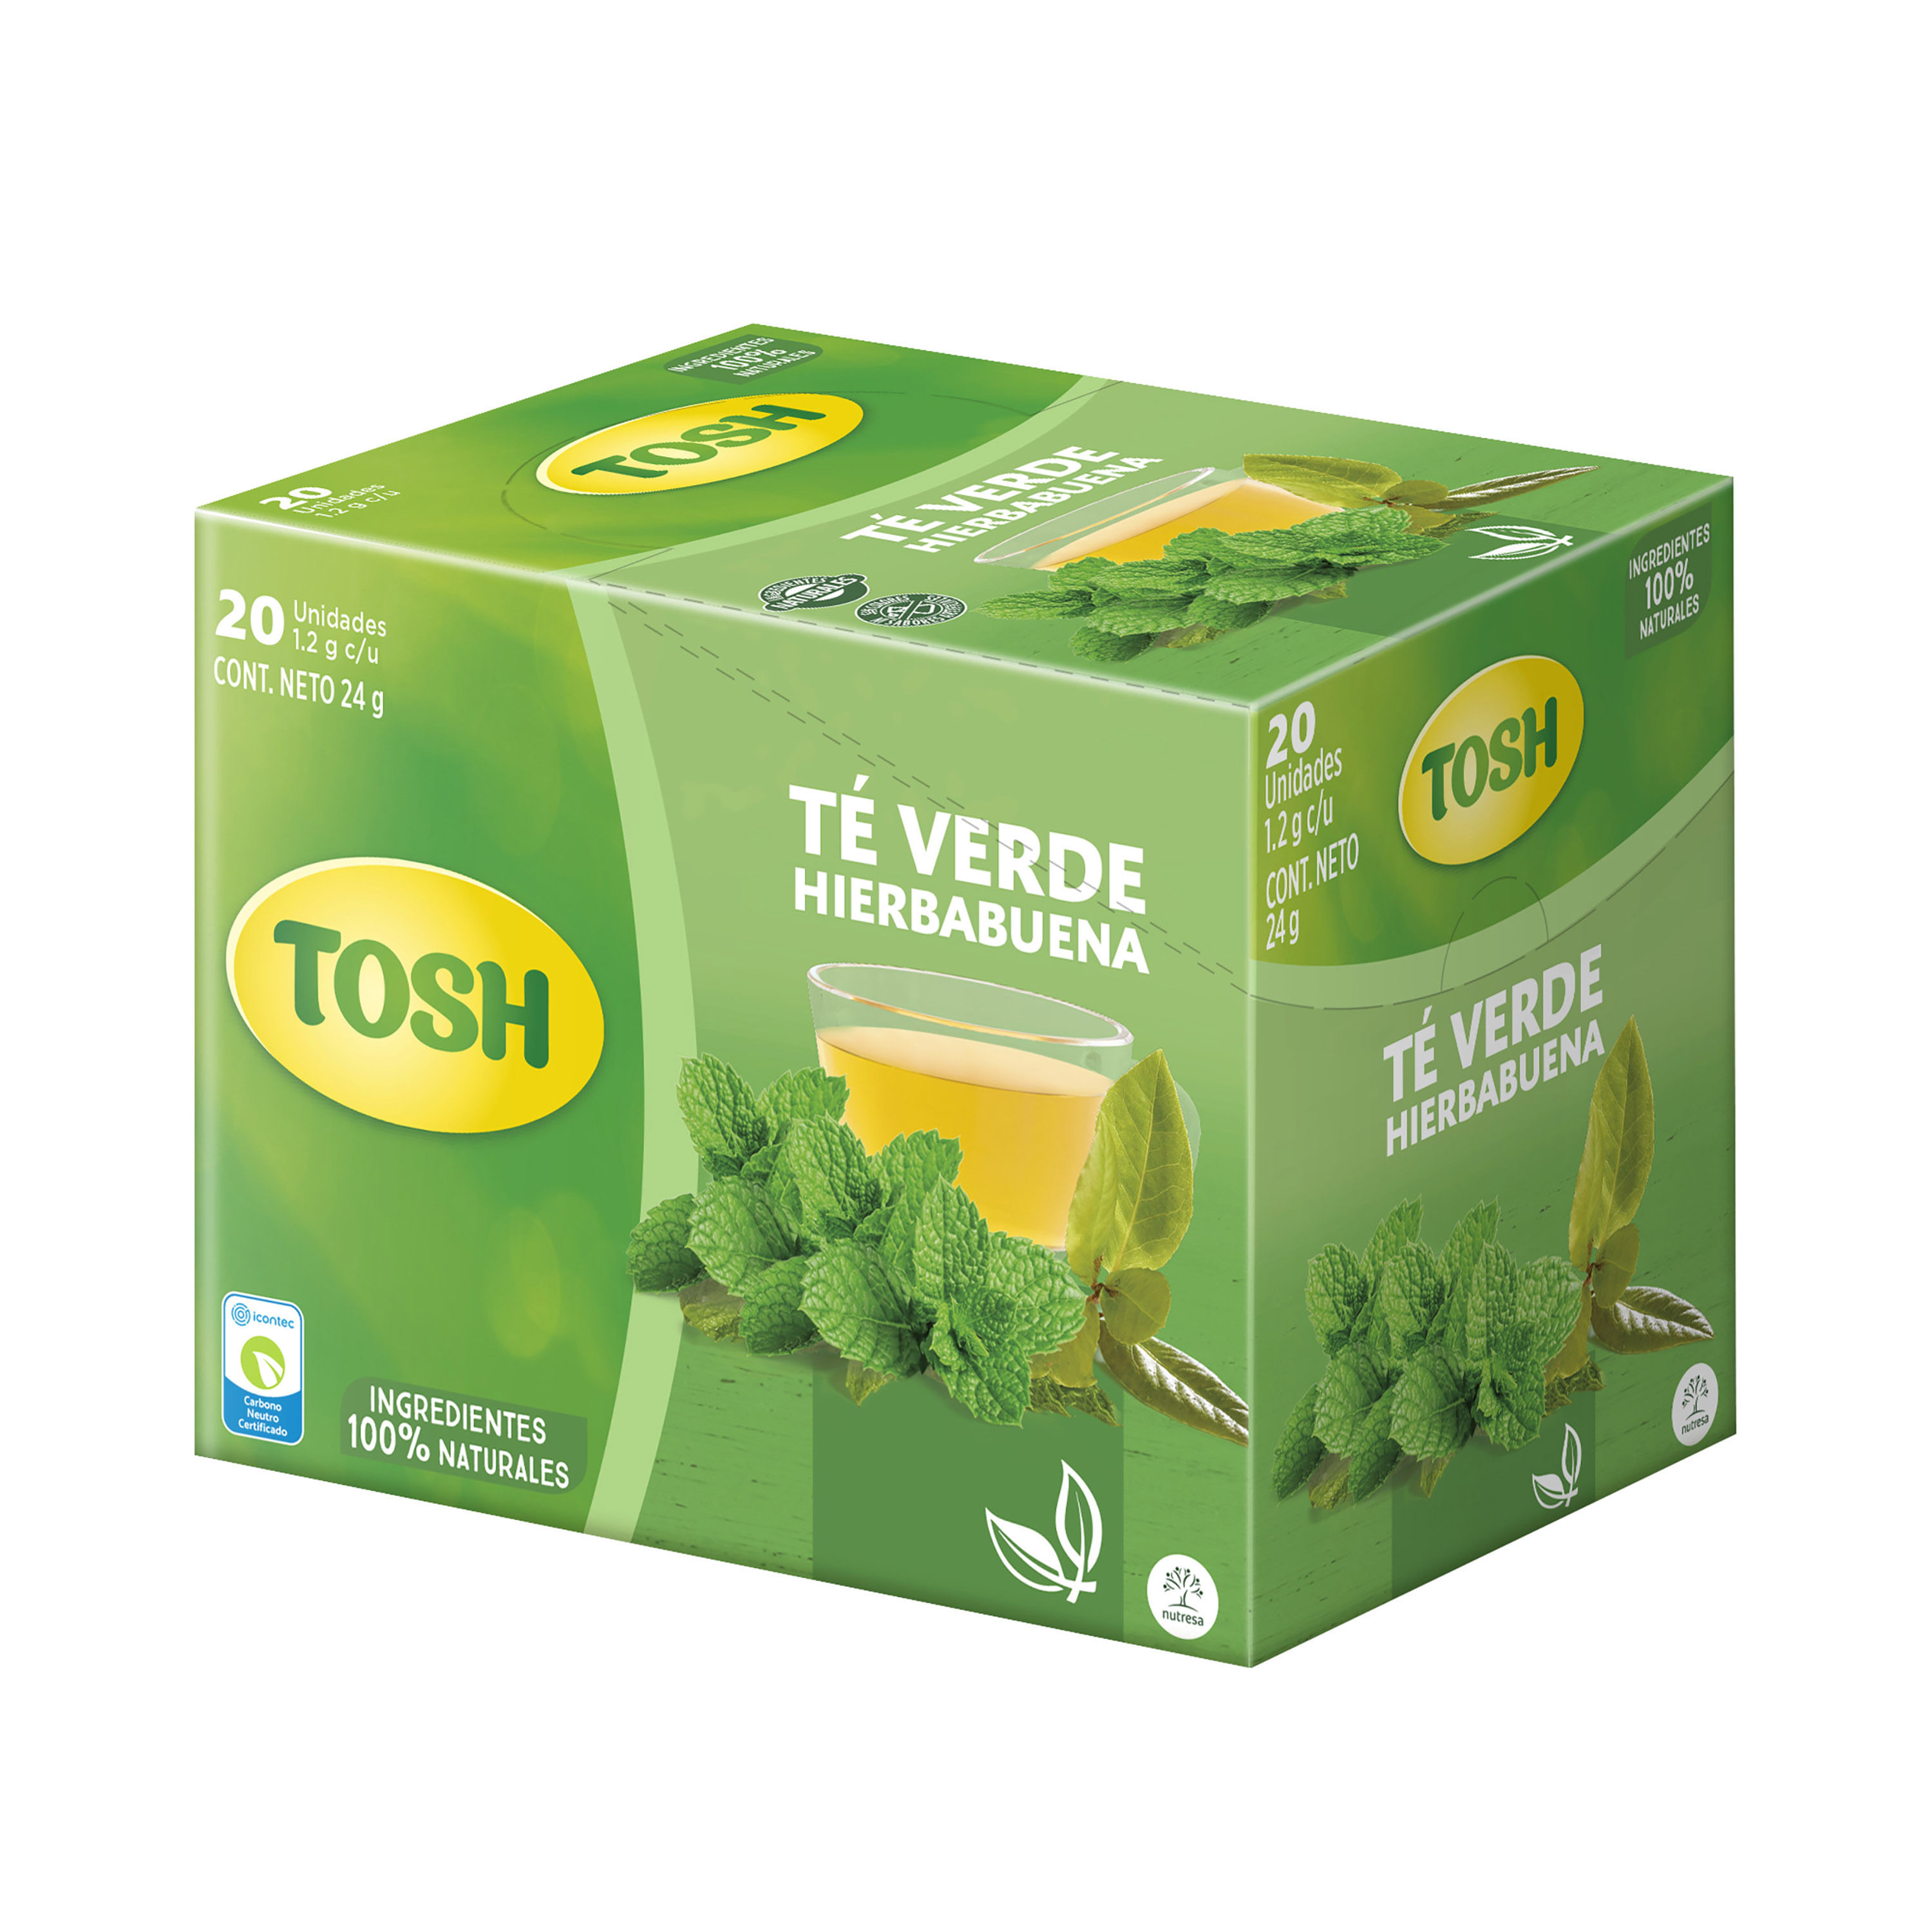 Comprar Infusión Tosh Té Verde Hierbabuena -24 g, Walmart Guatemala - Maxi  Despensa